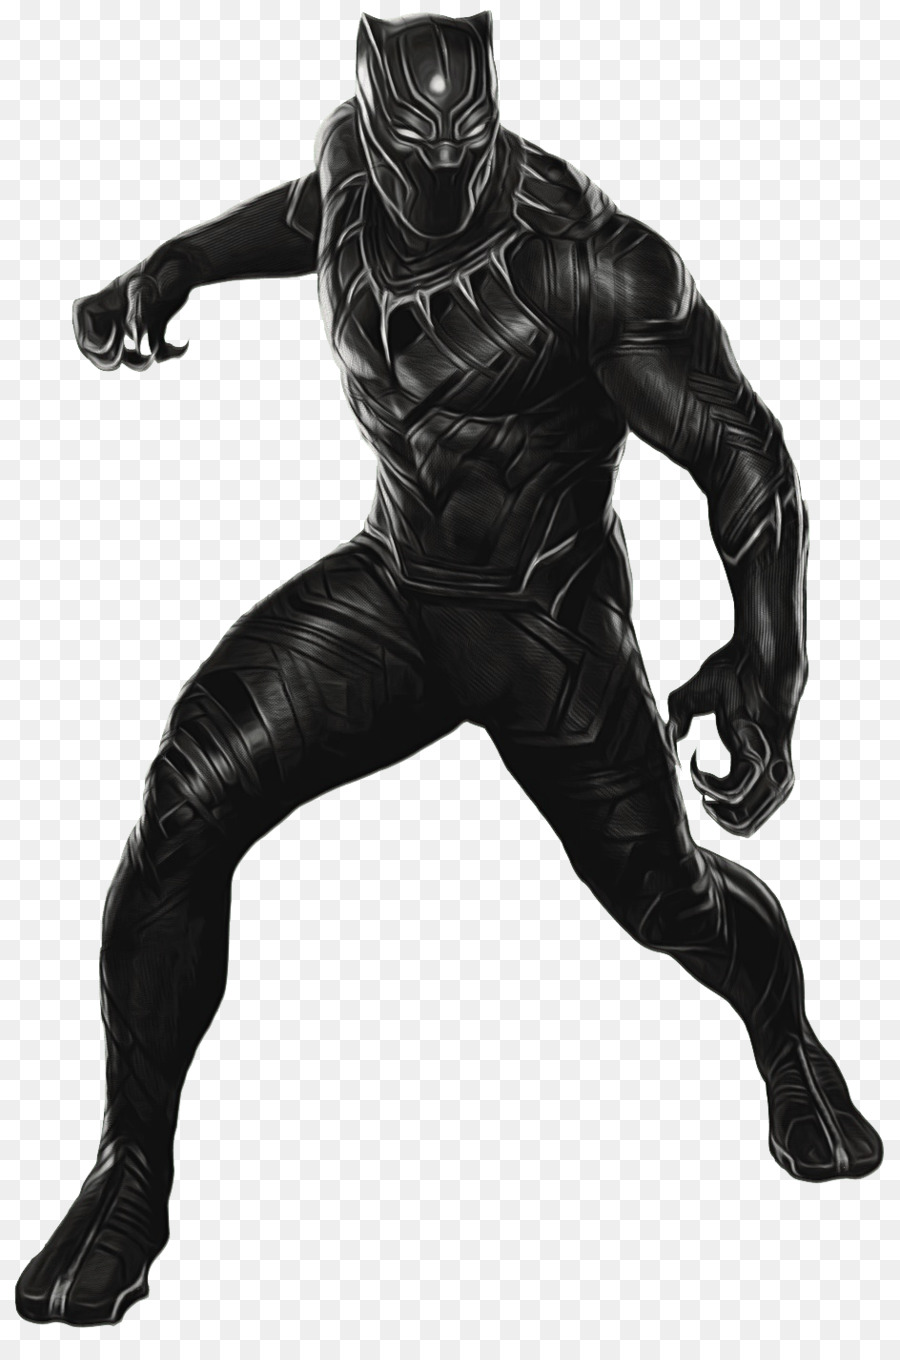 Black Panther Wanda Maximoff Clint Barton Erik Killmonger Shuri -  png download - 944*1414 - Free Transparent Black Panther png Download.